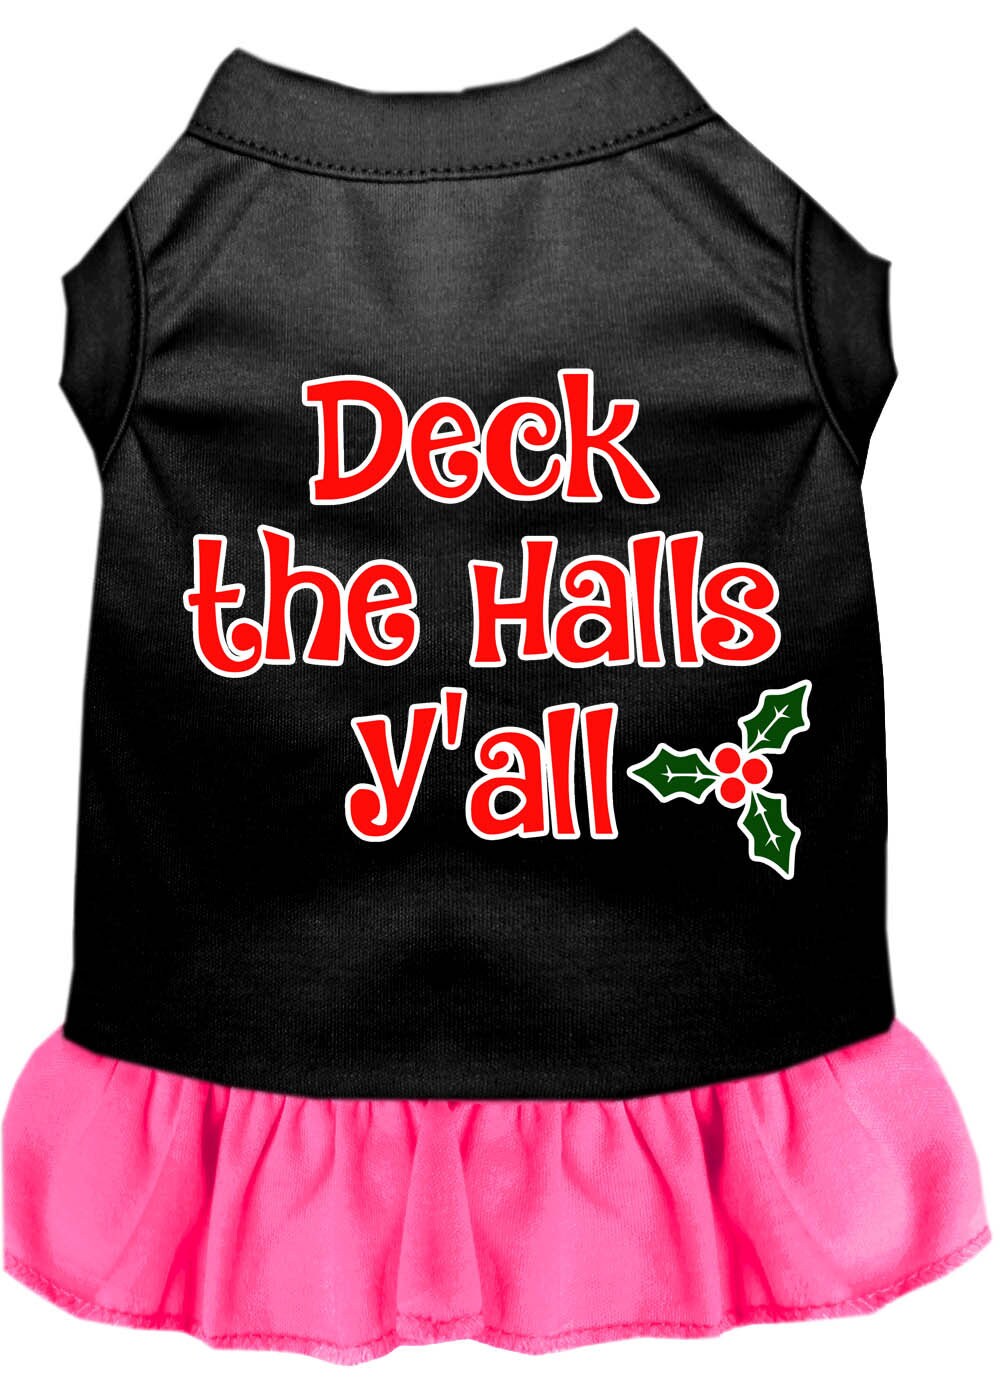 Christmas Dog Dress, Pet Dog & Cat Dress Screen Printed, "Deck The Halls Y'all"